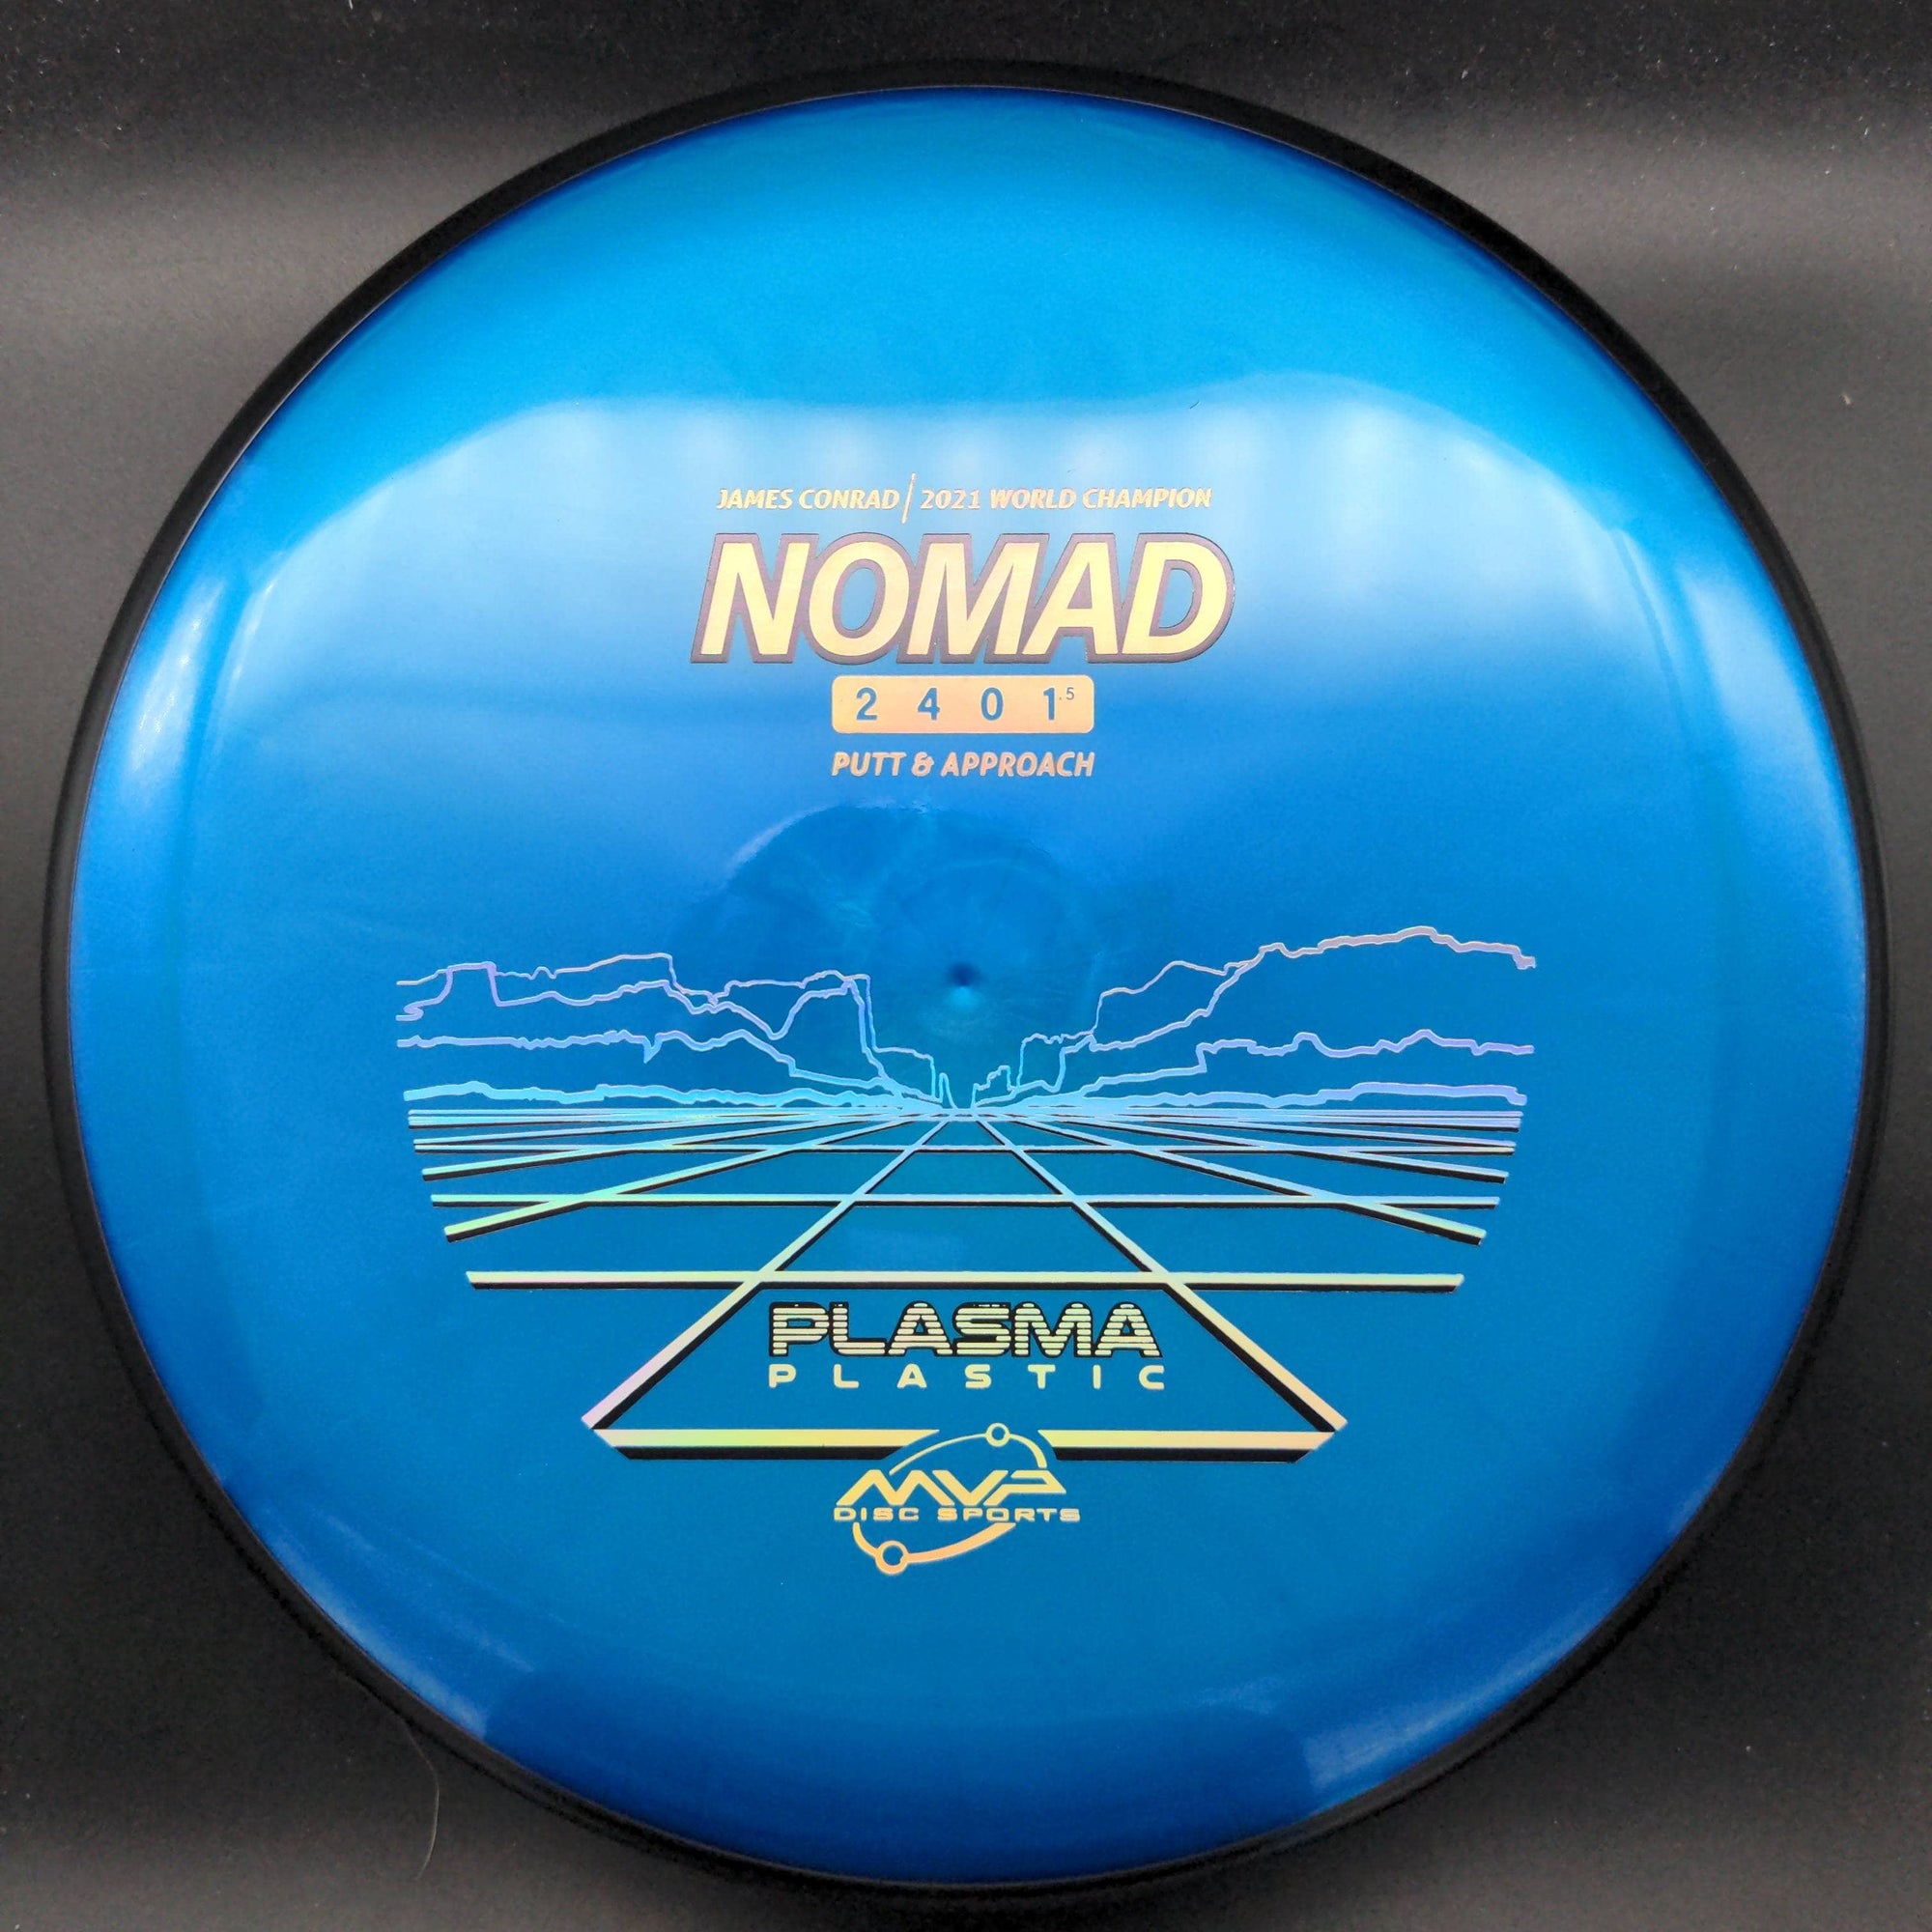 MVP Putter Blurple 173g 2 Nomad, Plasma James Conrad 2021 World Champion